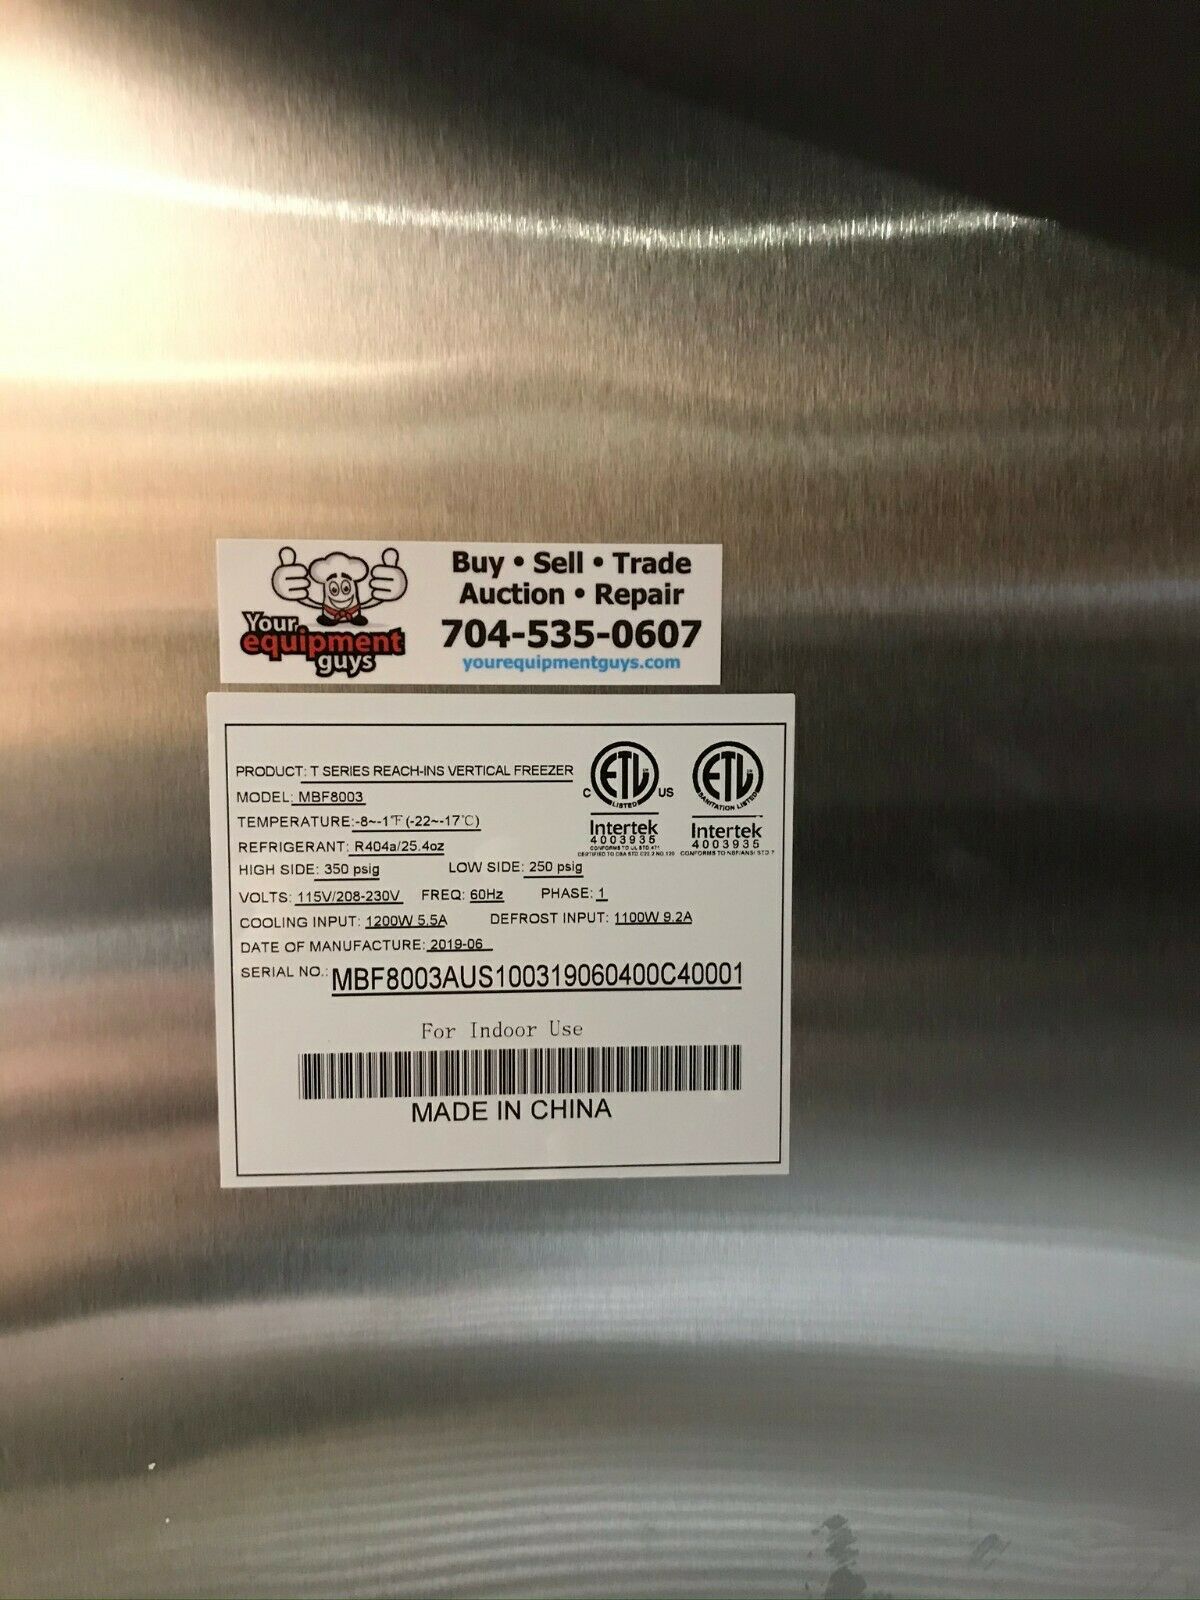 2019 Atosa Mbf8003 3 Door Upright Freezer Stainless Steel 115 208 230v Ph 1 Restaurant Equipment Charlotte Gastonia Nc Your Equipment Guys